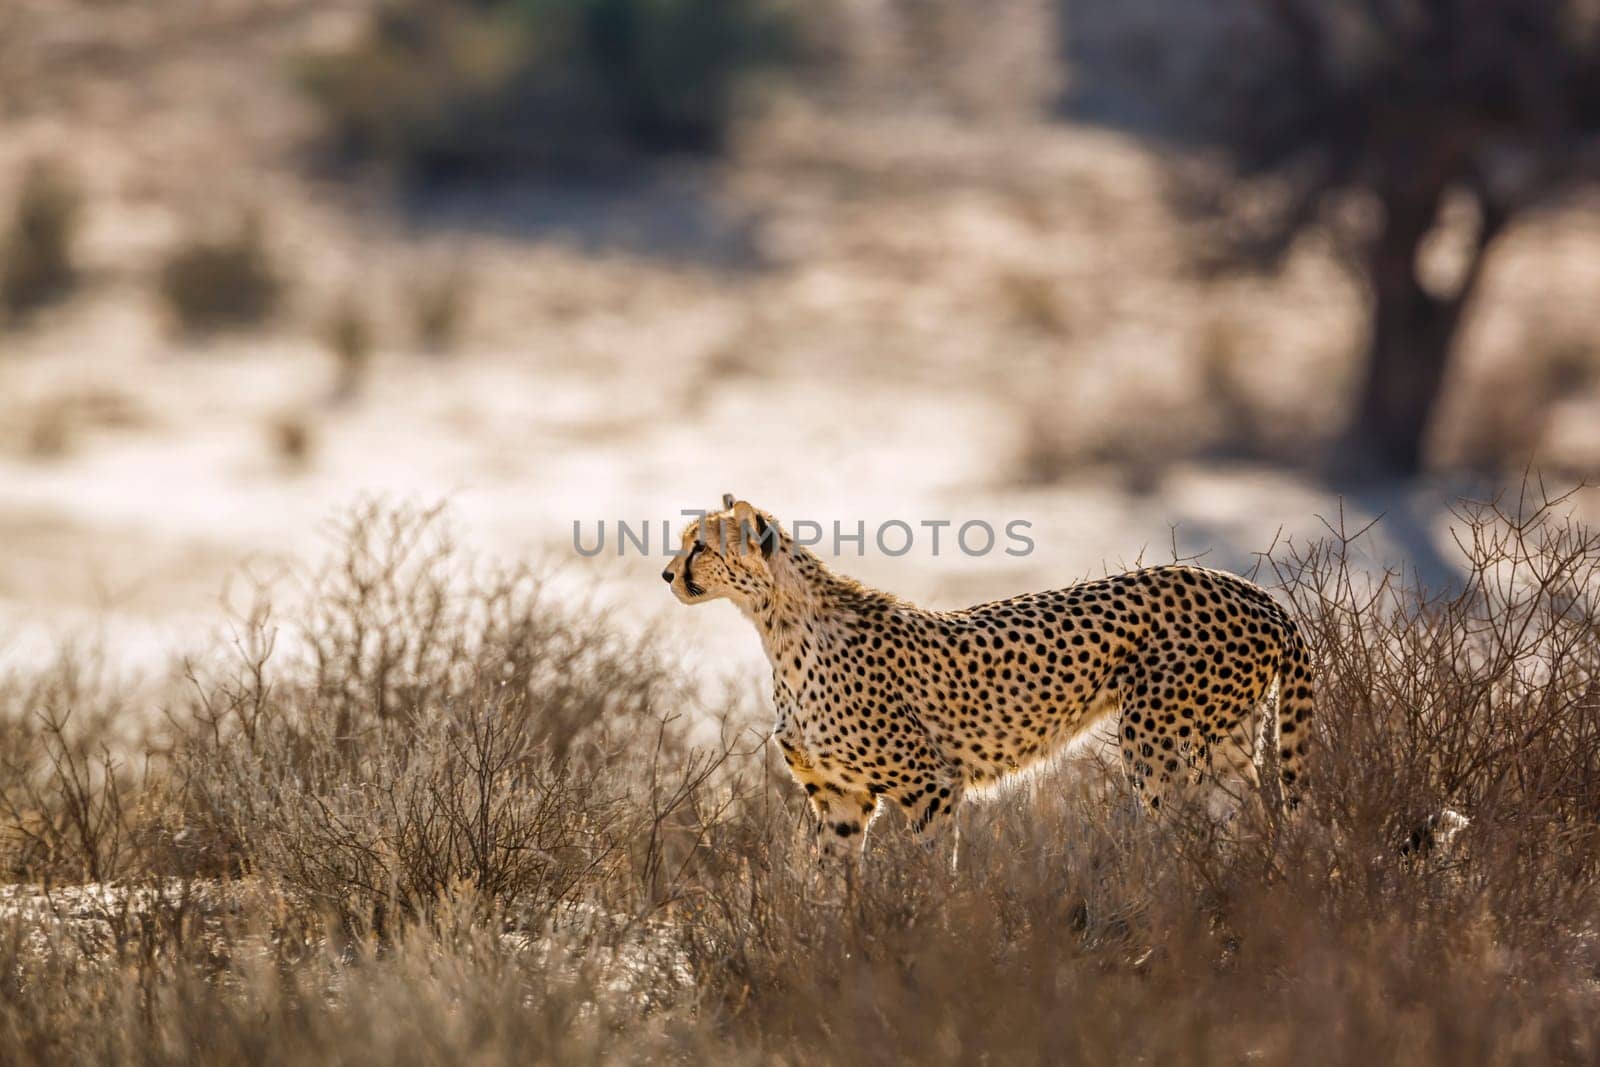 Cheetah in alert in Kgalagadi transfrontier park, South Africa ; Specie Acinonyx jubatus family of Felidae